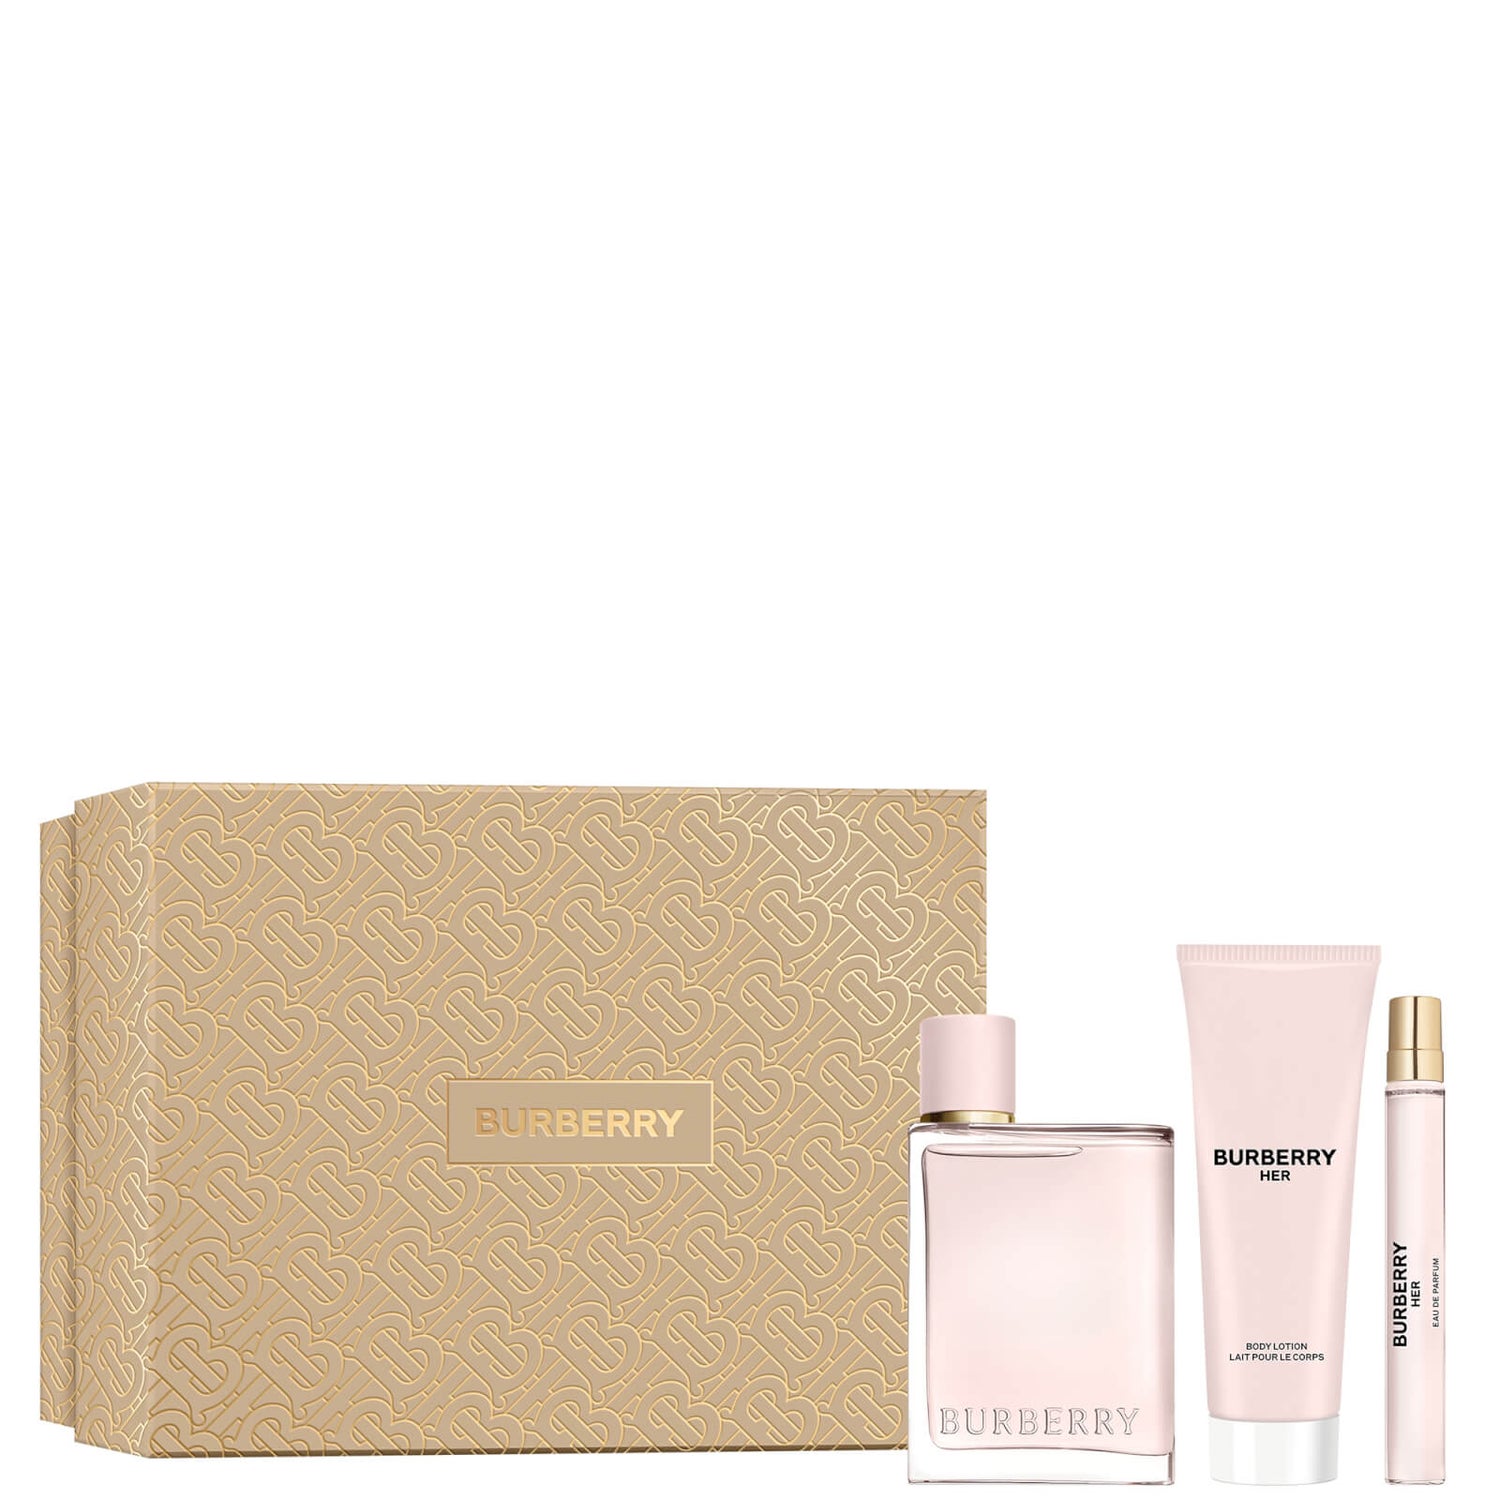 Burberry Her Eau de Parfum 50ml Gift Set (Worth £162.00)